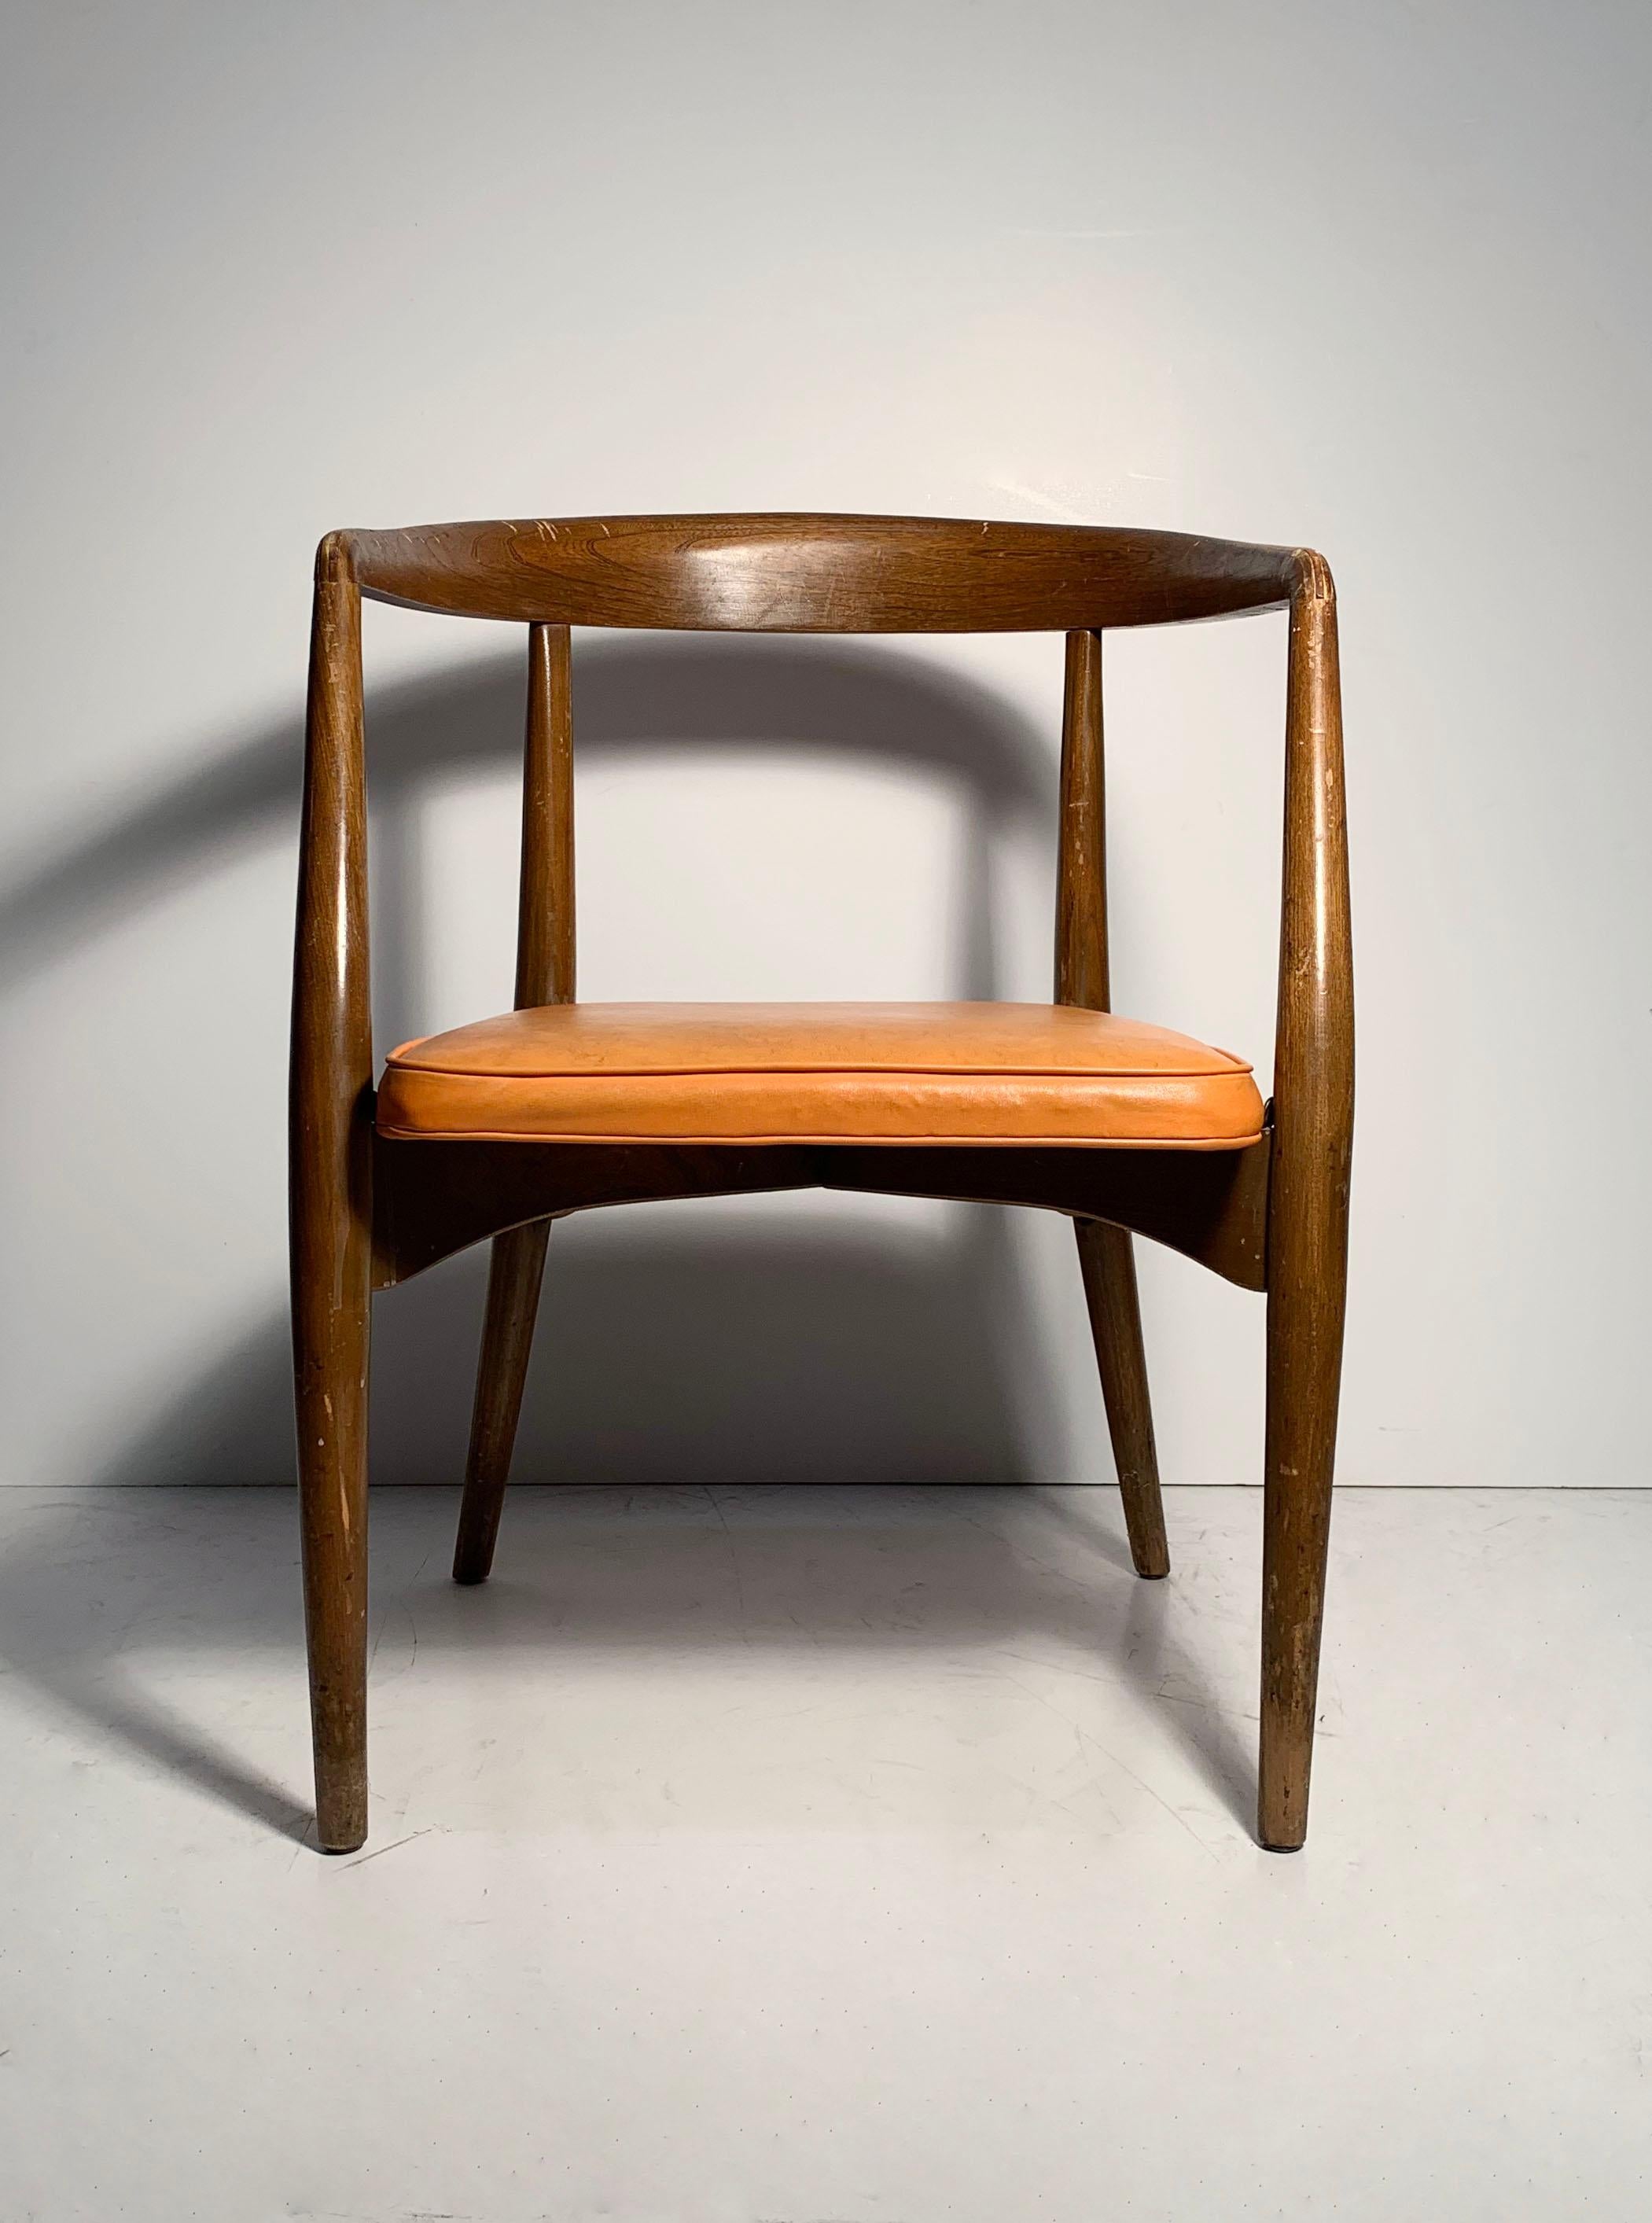 Pair of original vintage Lawrence Peabody arm chairs.
Style of Paul McCobb Milo Baughman